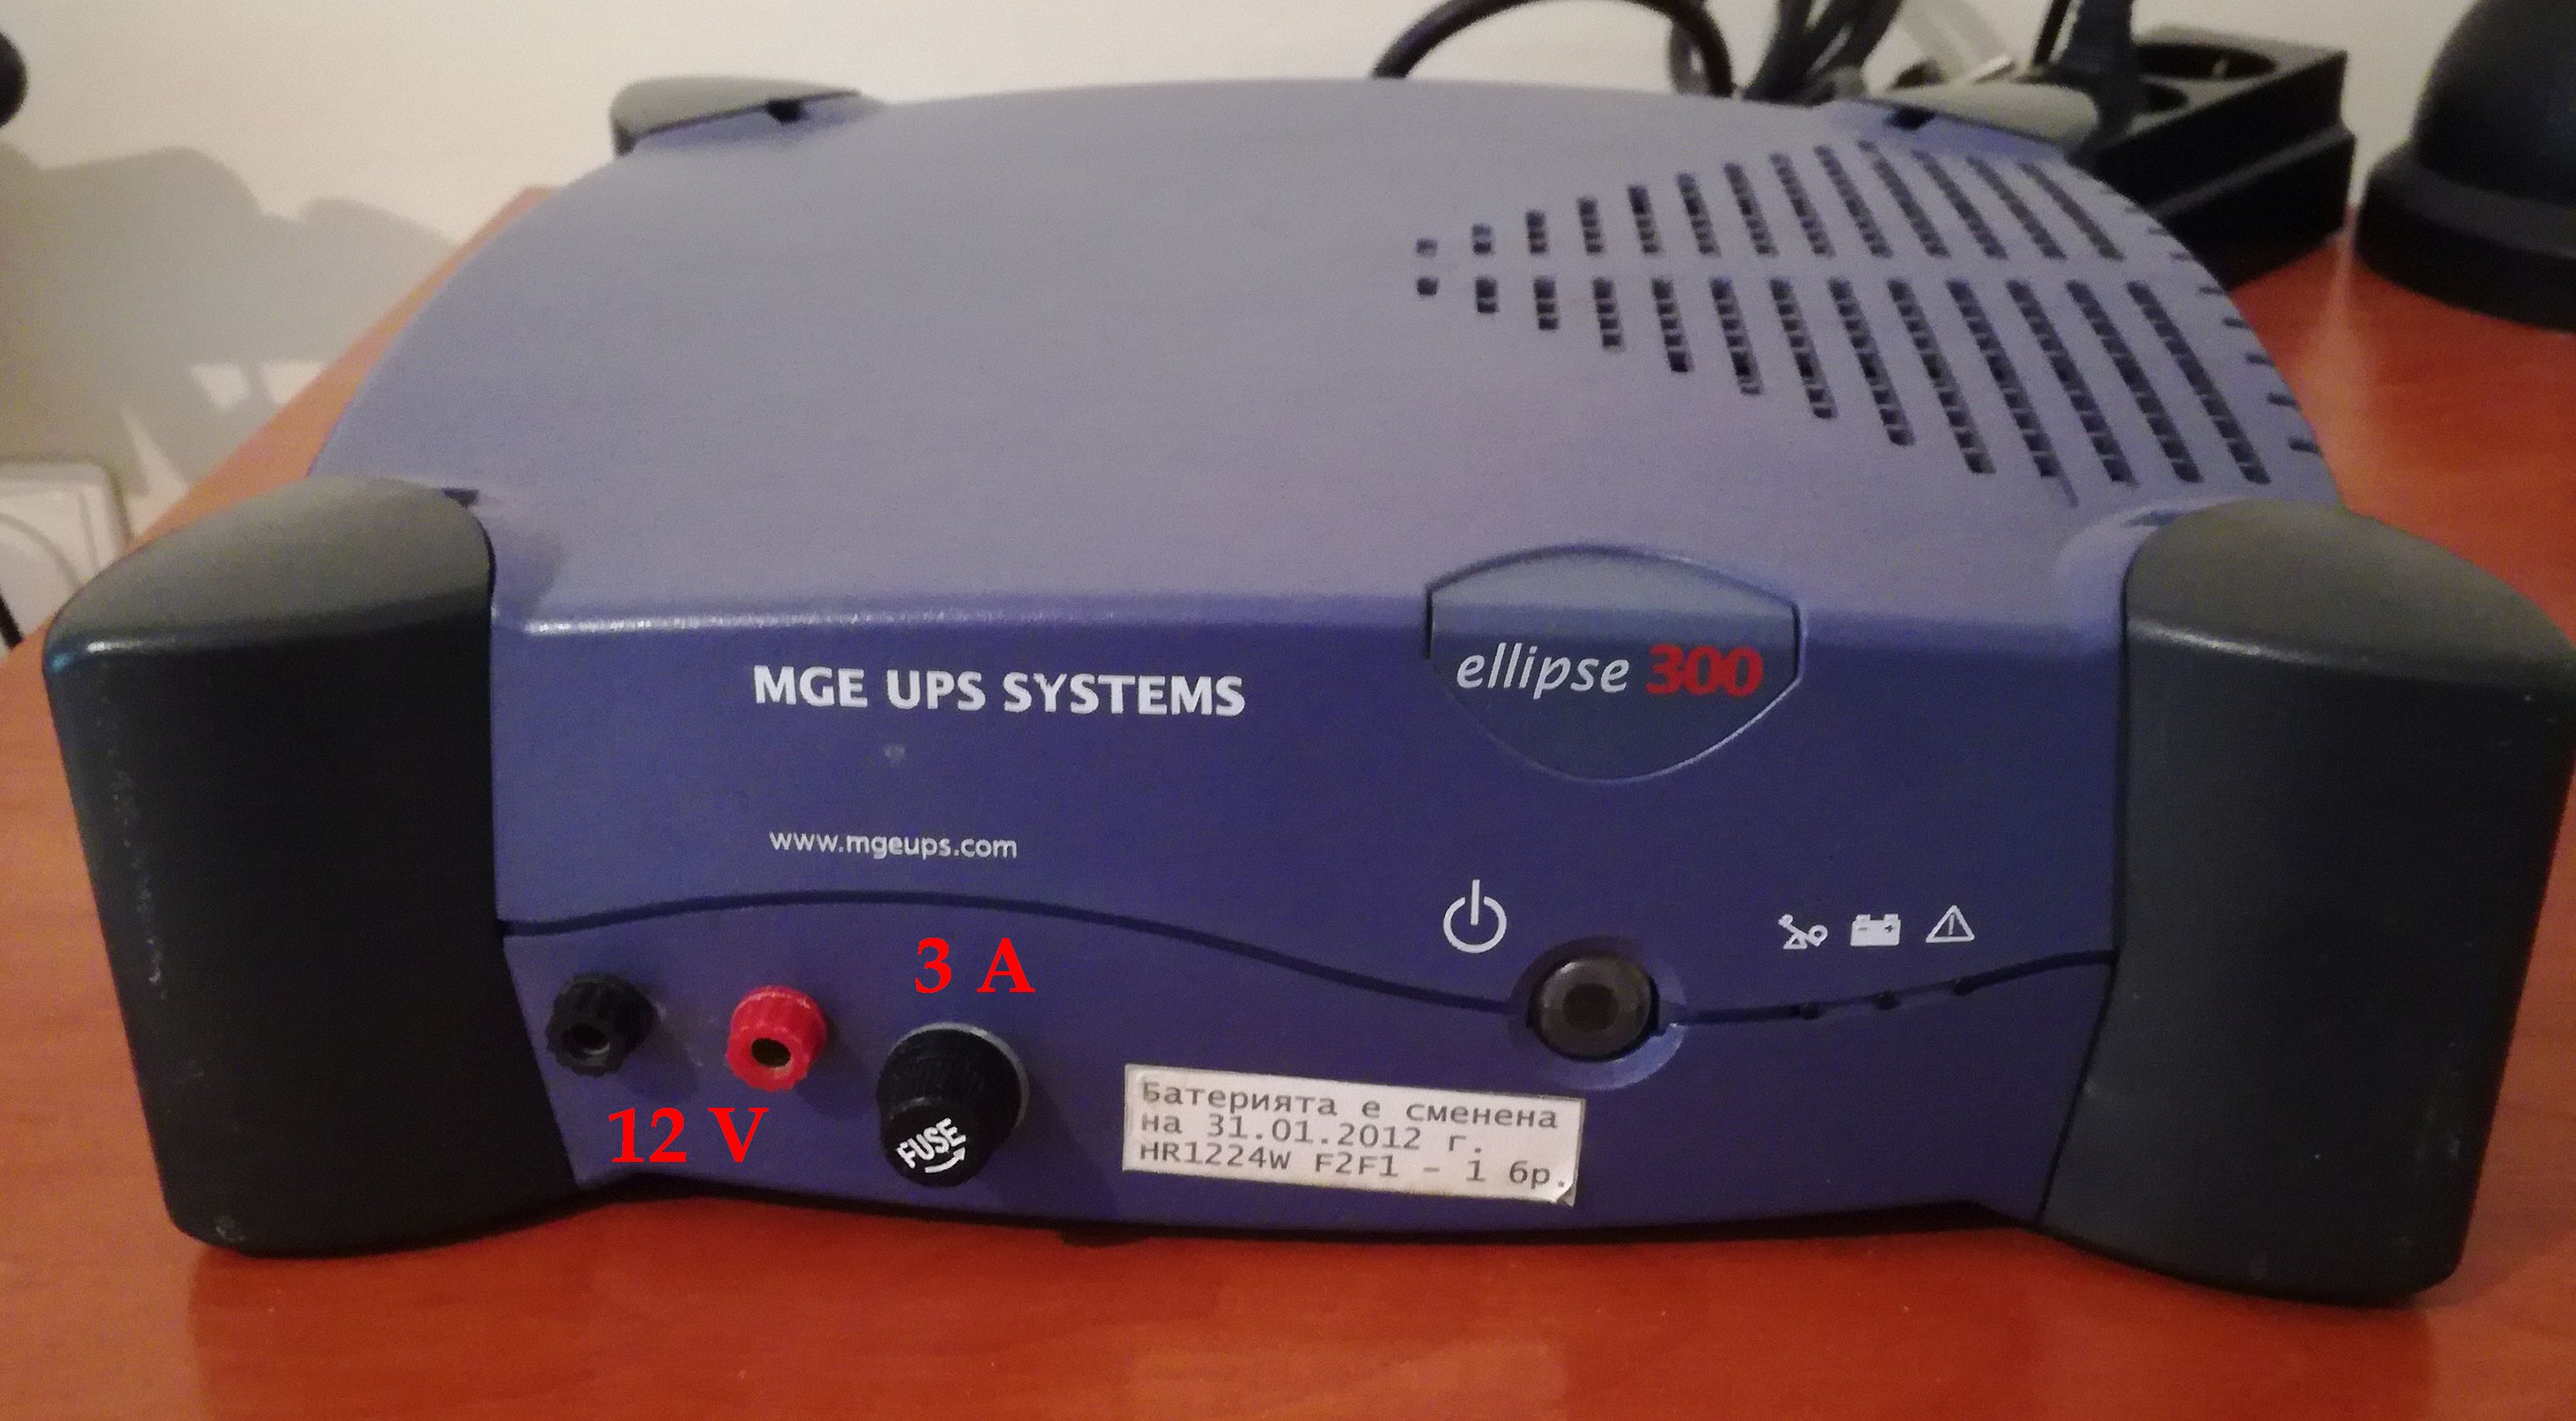 MGE ellipse 300 a battery memory saver-2.jpg